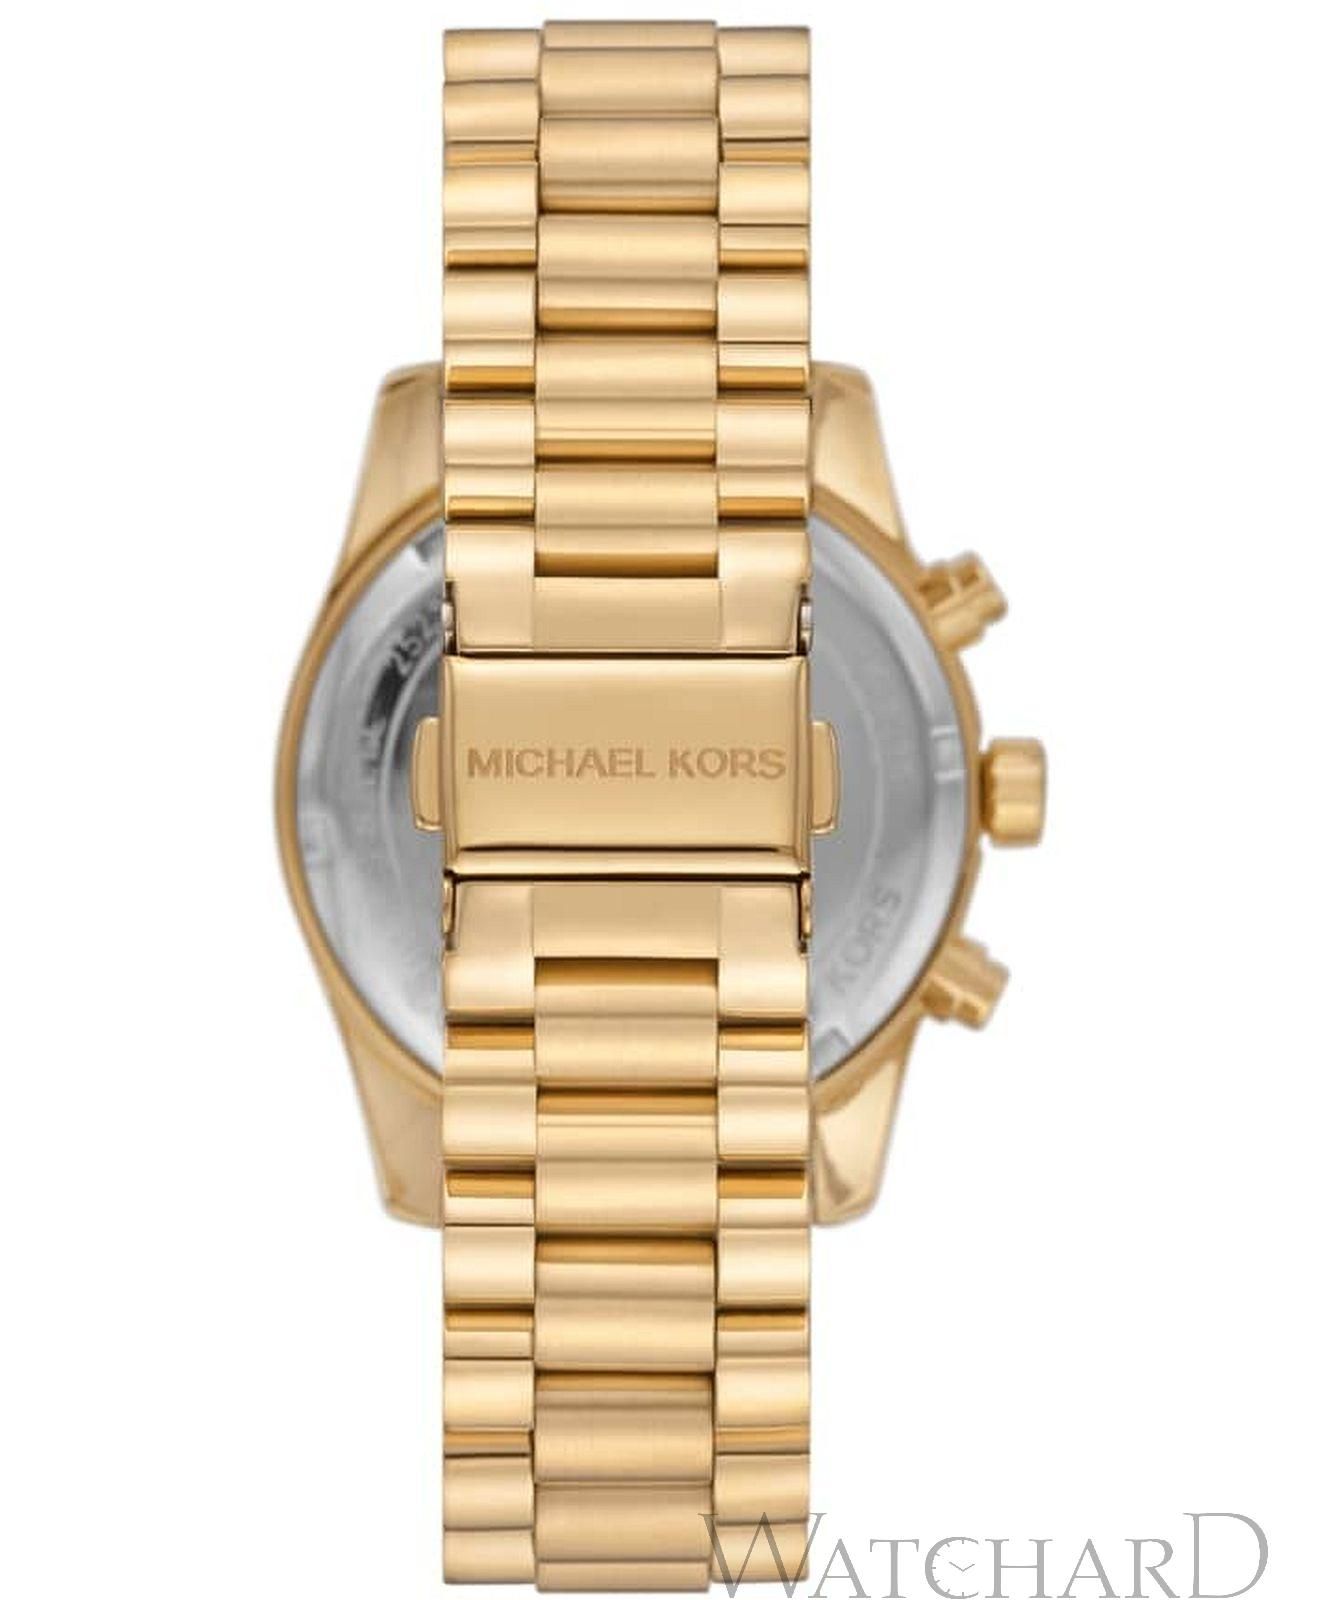 Michael Kors MK7216 - Lexington Chronograph Watch • Watchard.com